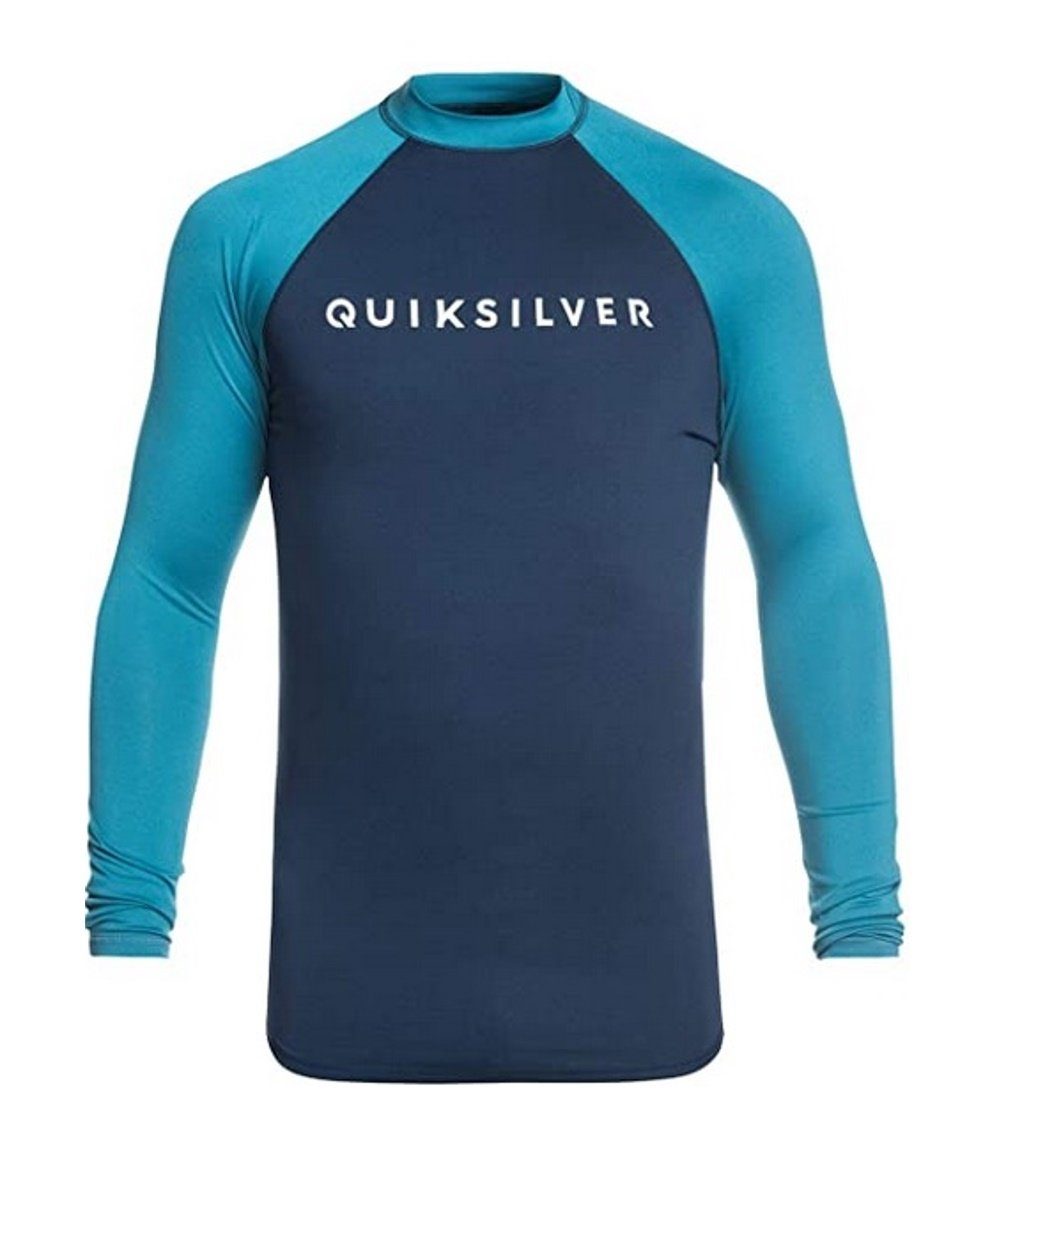 Sport Sportshirts Quiksilver Rash Guard Quiksilver Surfshirt Lycra Shirt Always